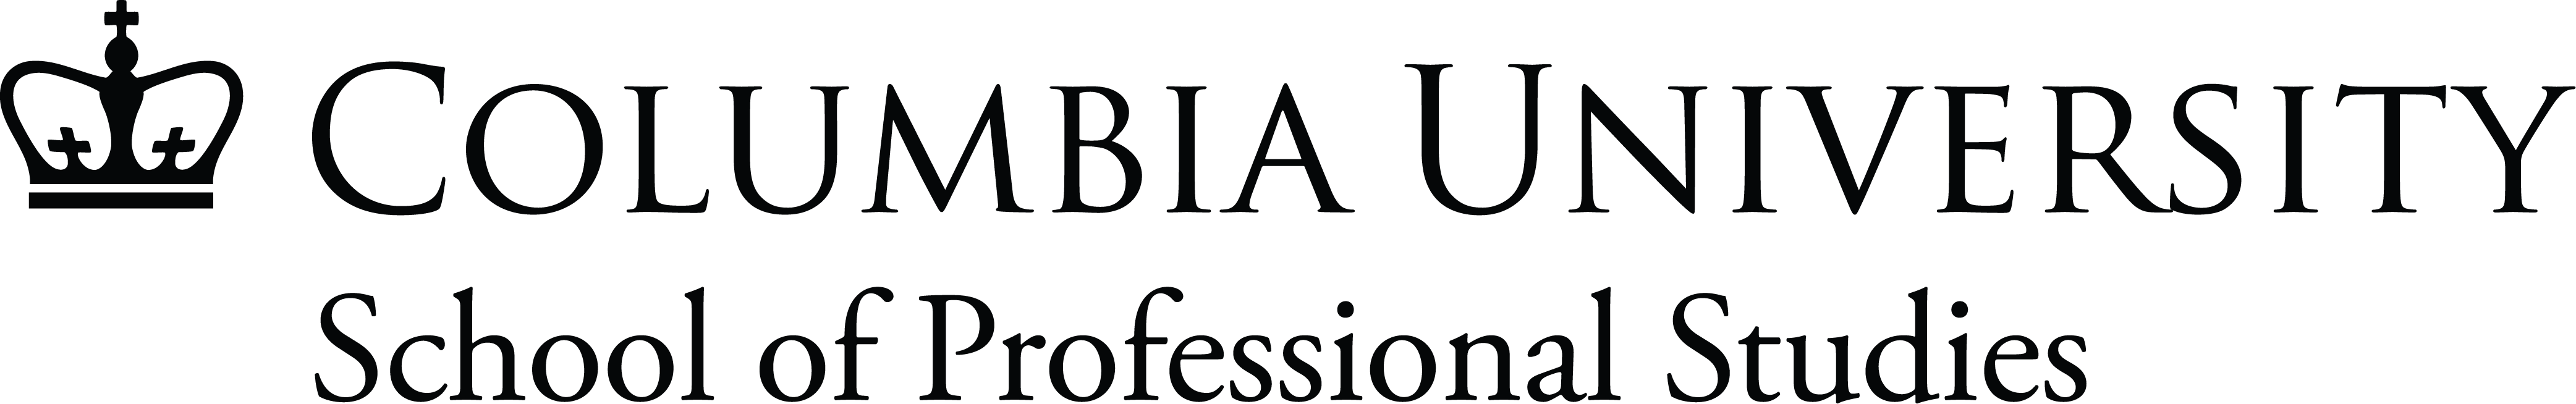 School of Professional Studies logo